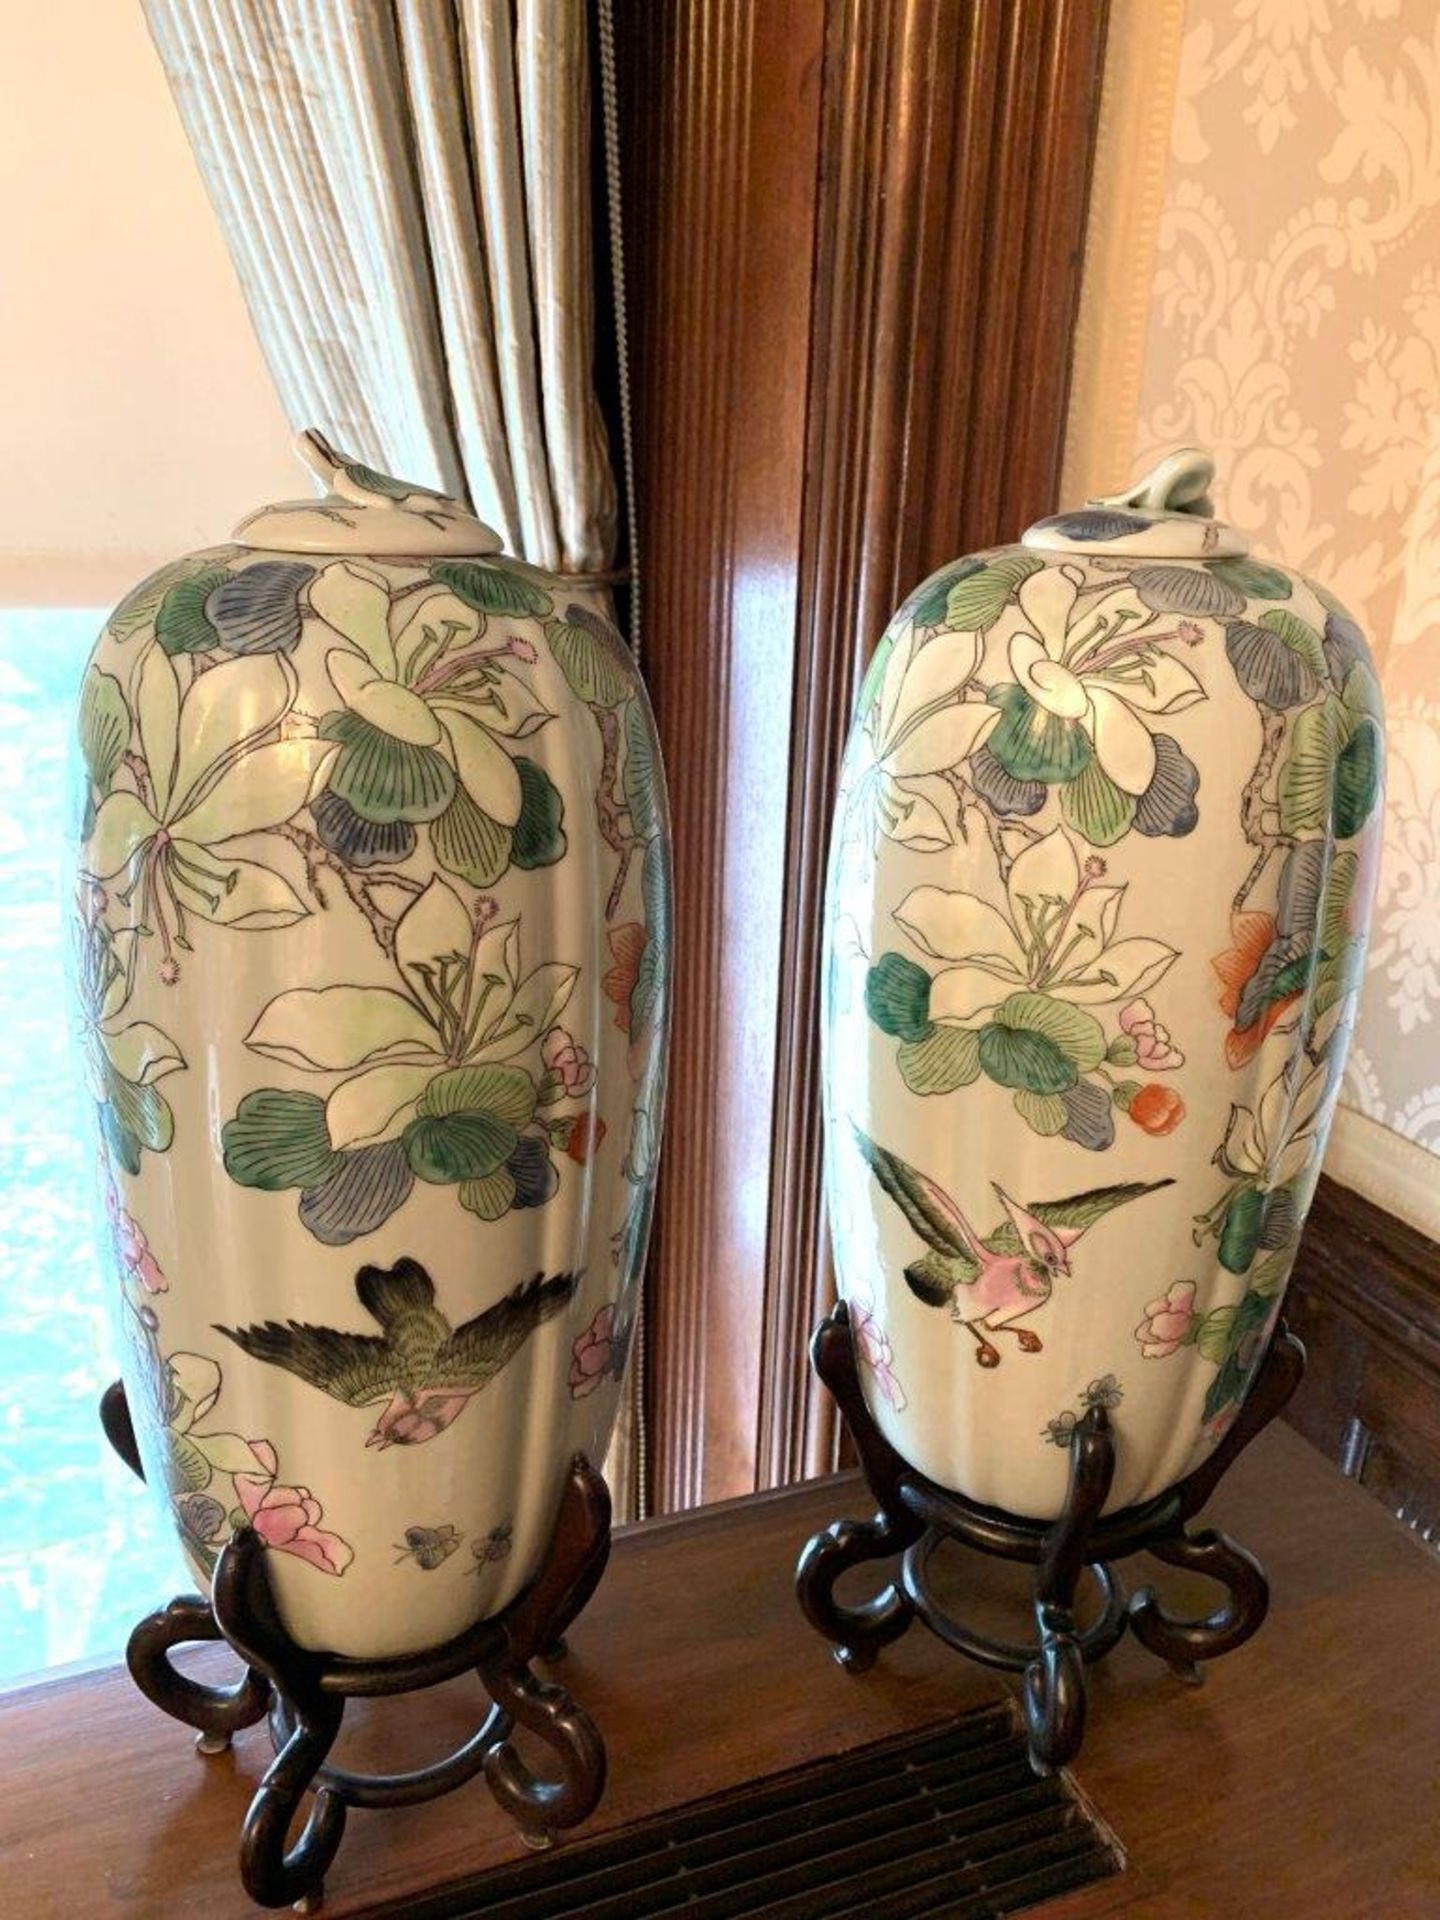 Pair of gourd shaped lidded vases